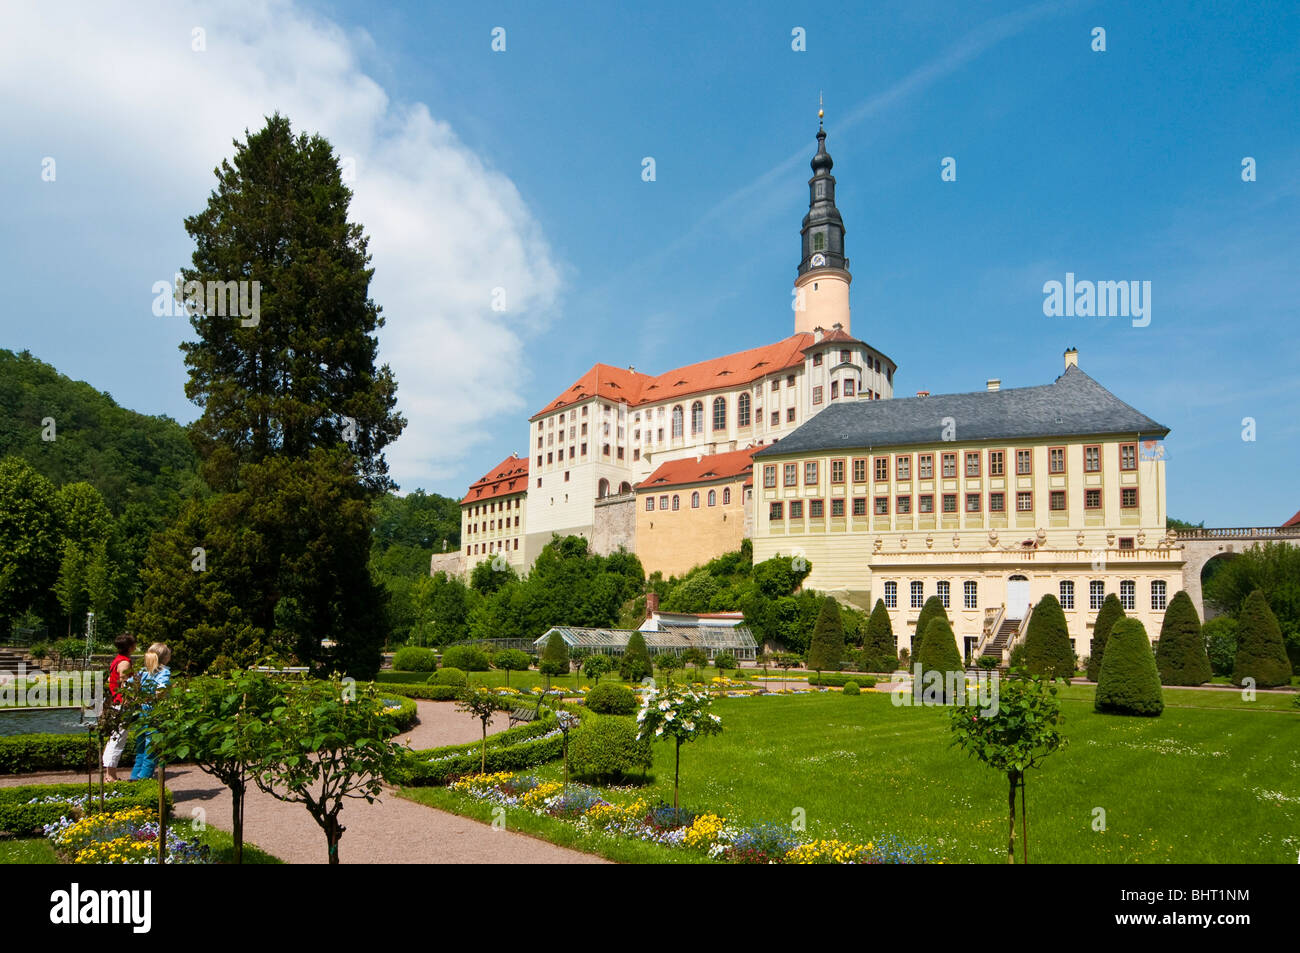 Castle Weesenstein and gardens near Dresden, Germany Stock Photo